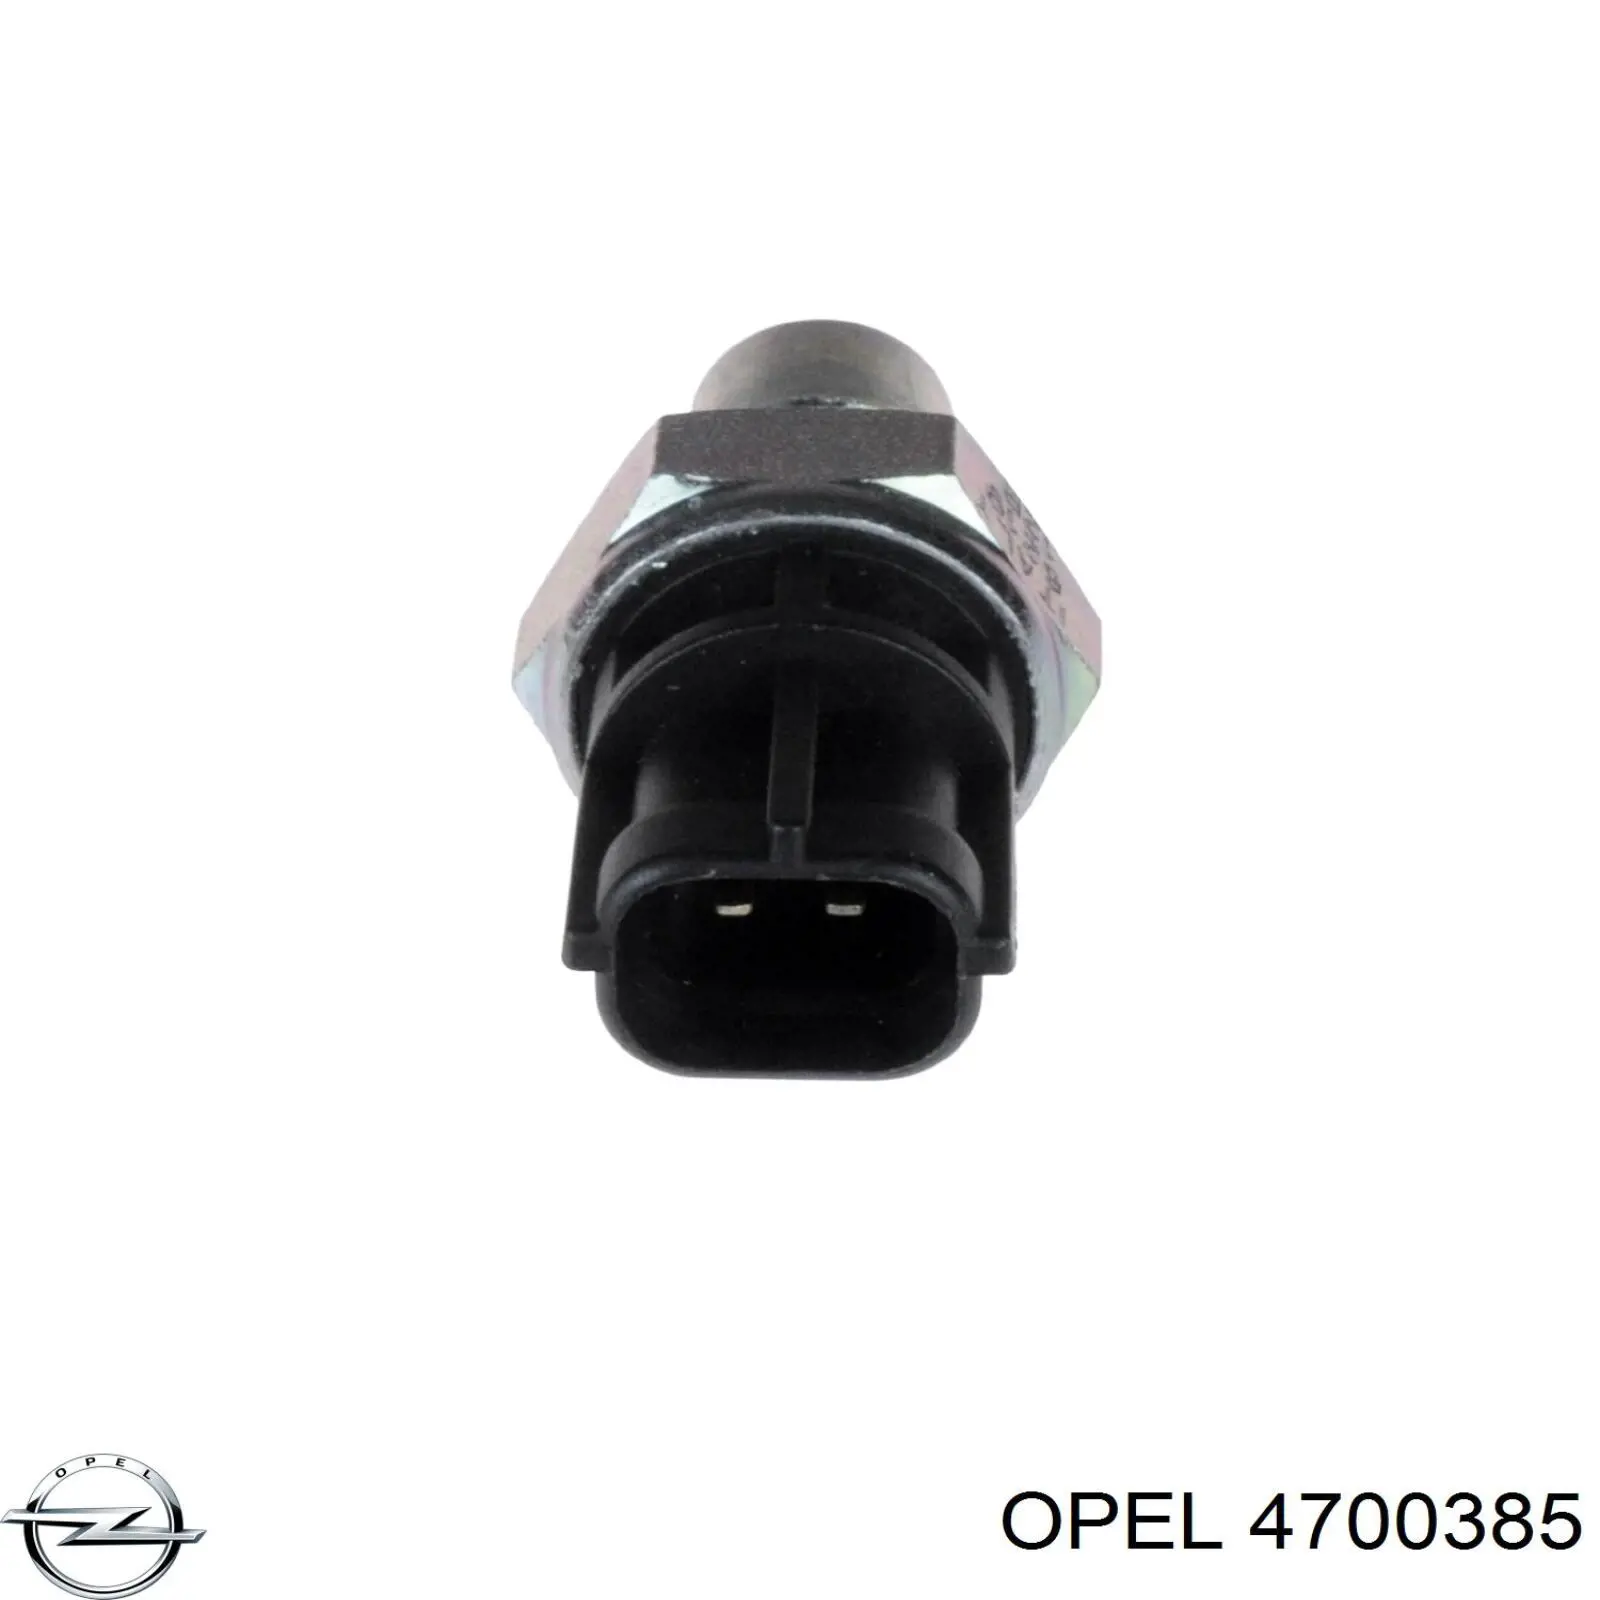 4700385 Opel sensor de marcha atrás